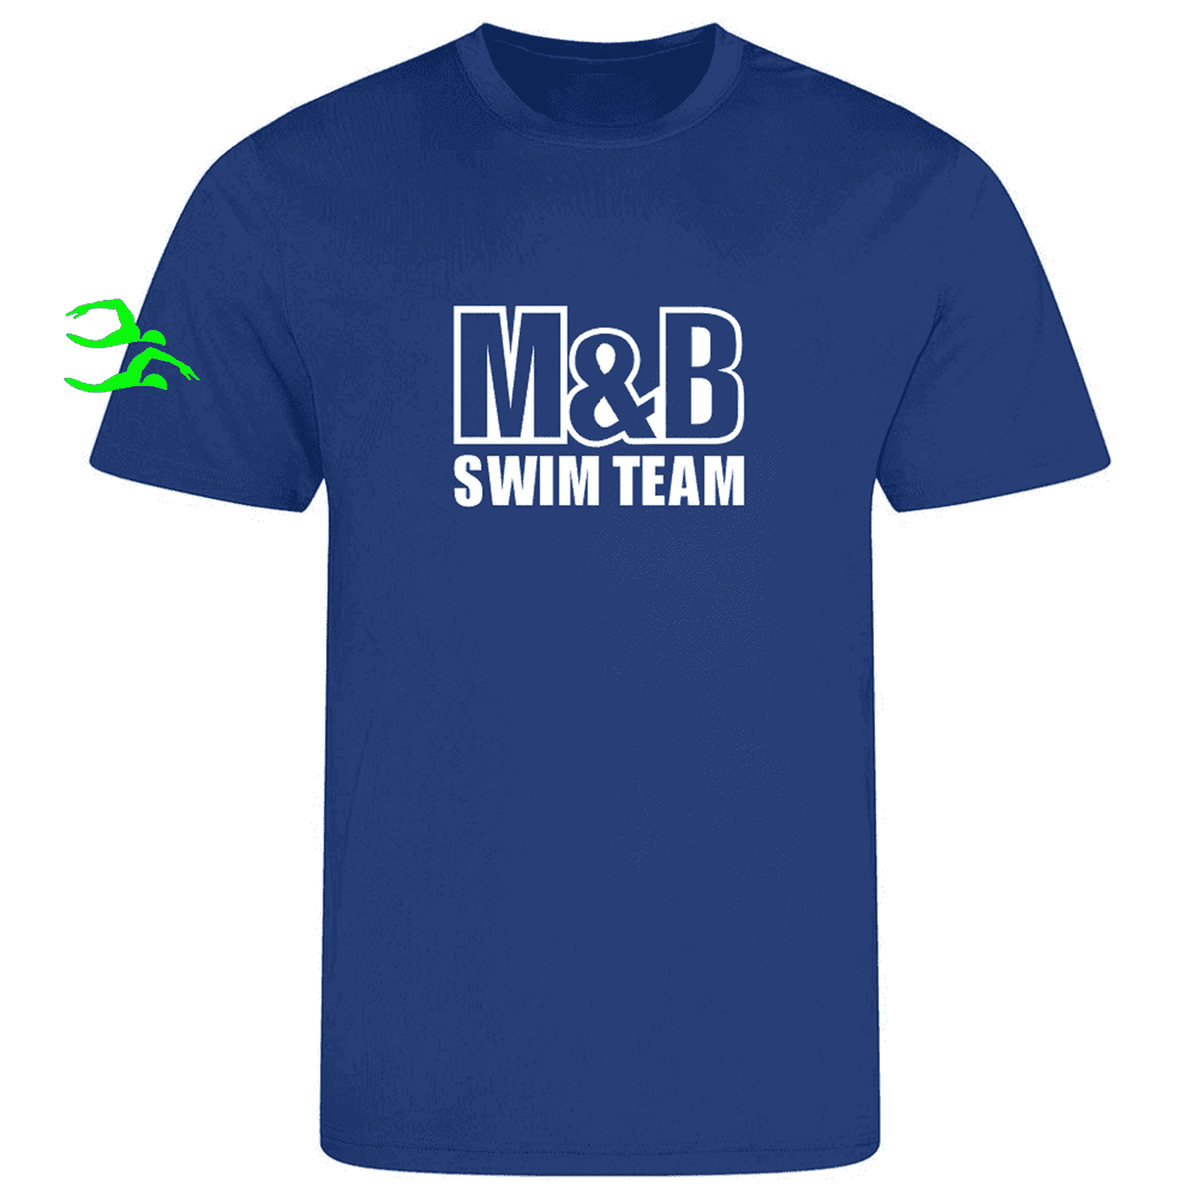 M&B ASC - Tech T-Shirt Adults